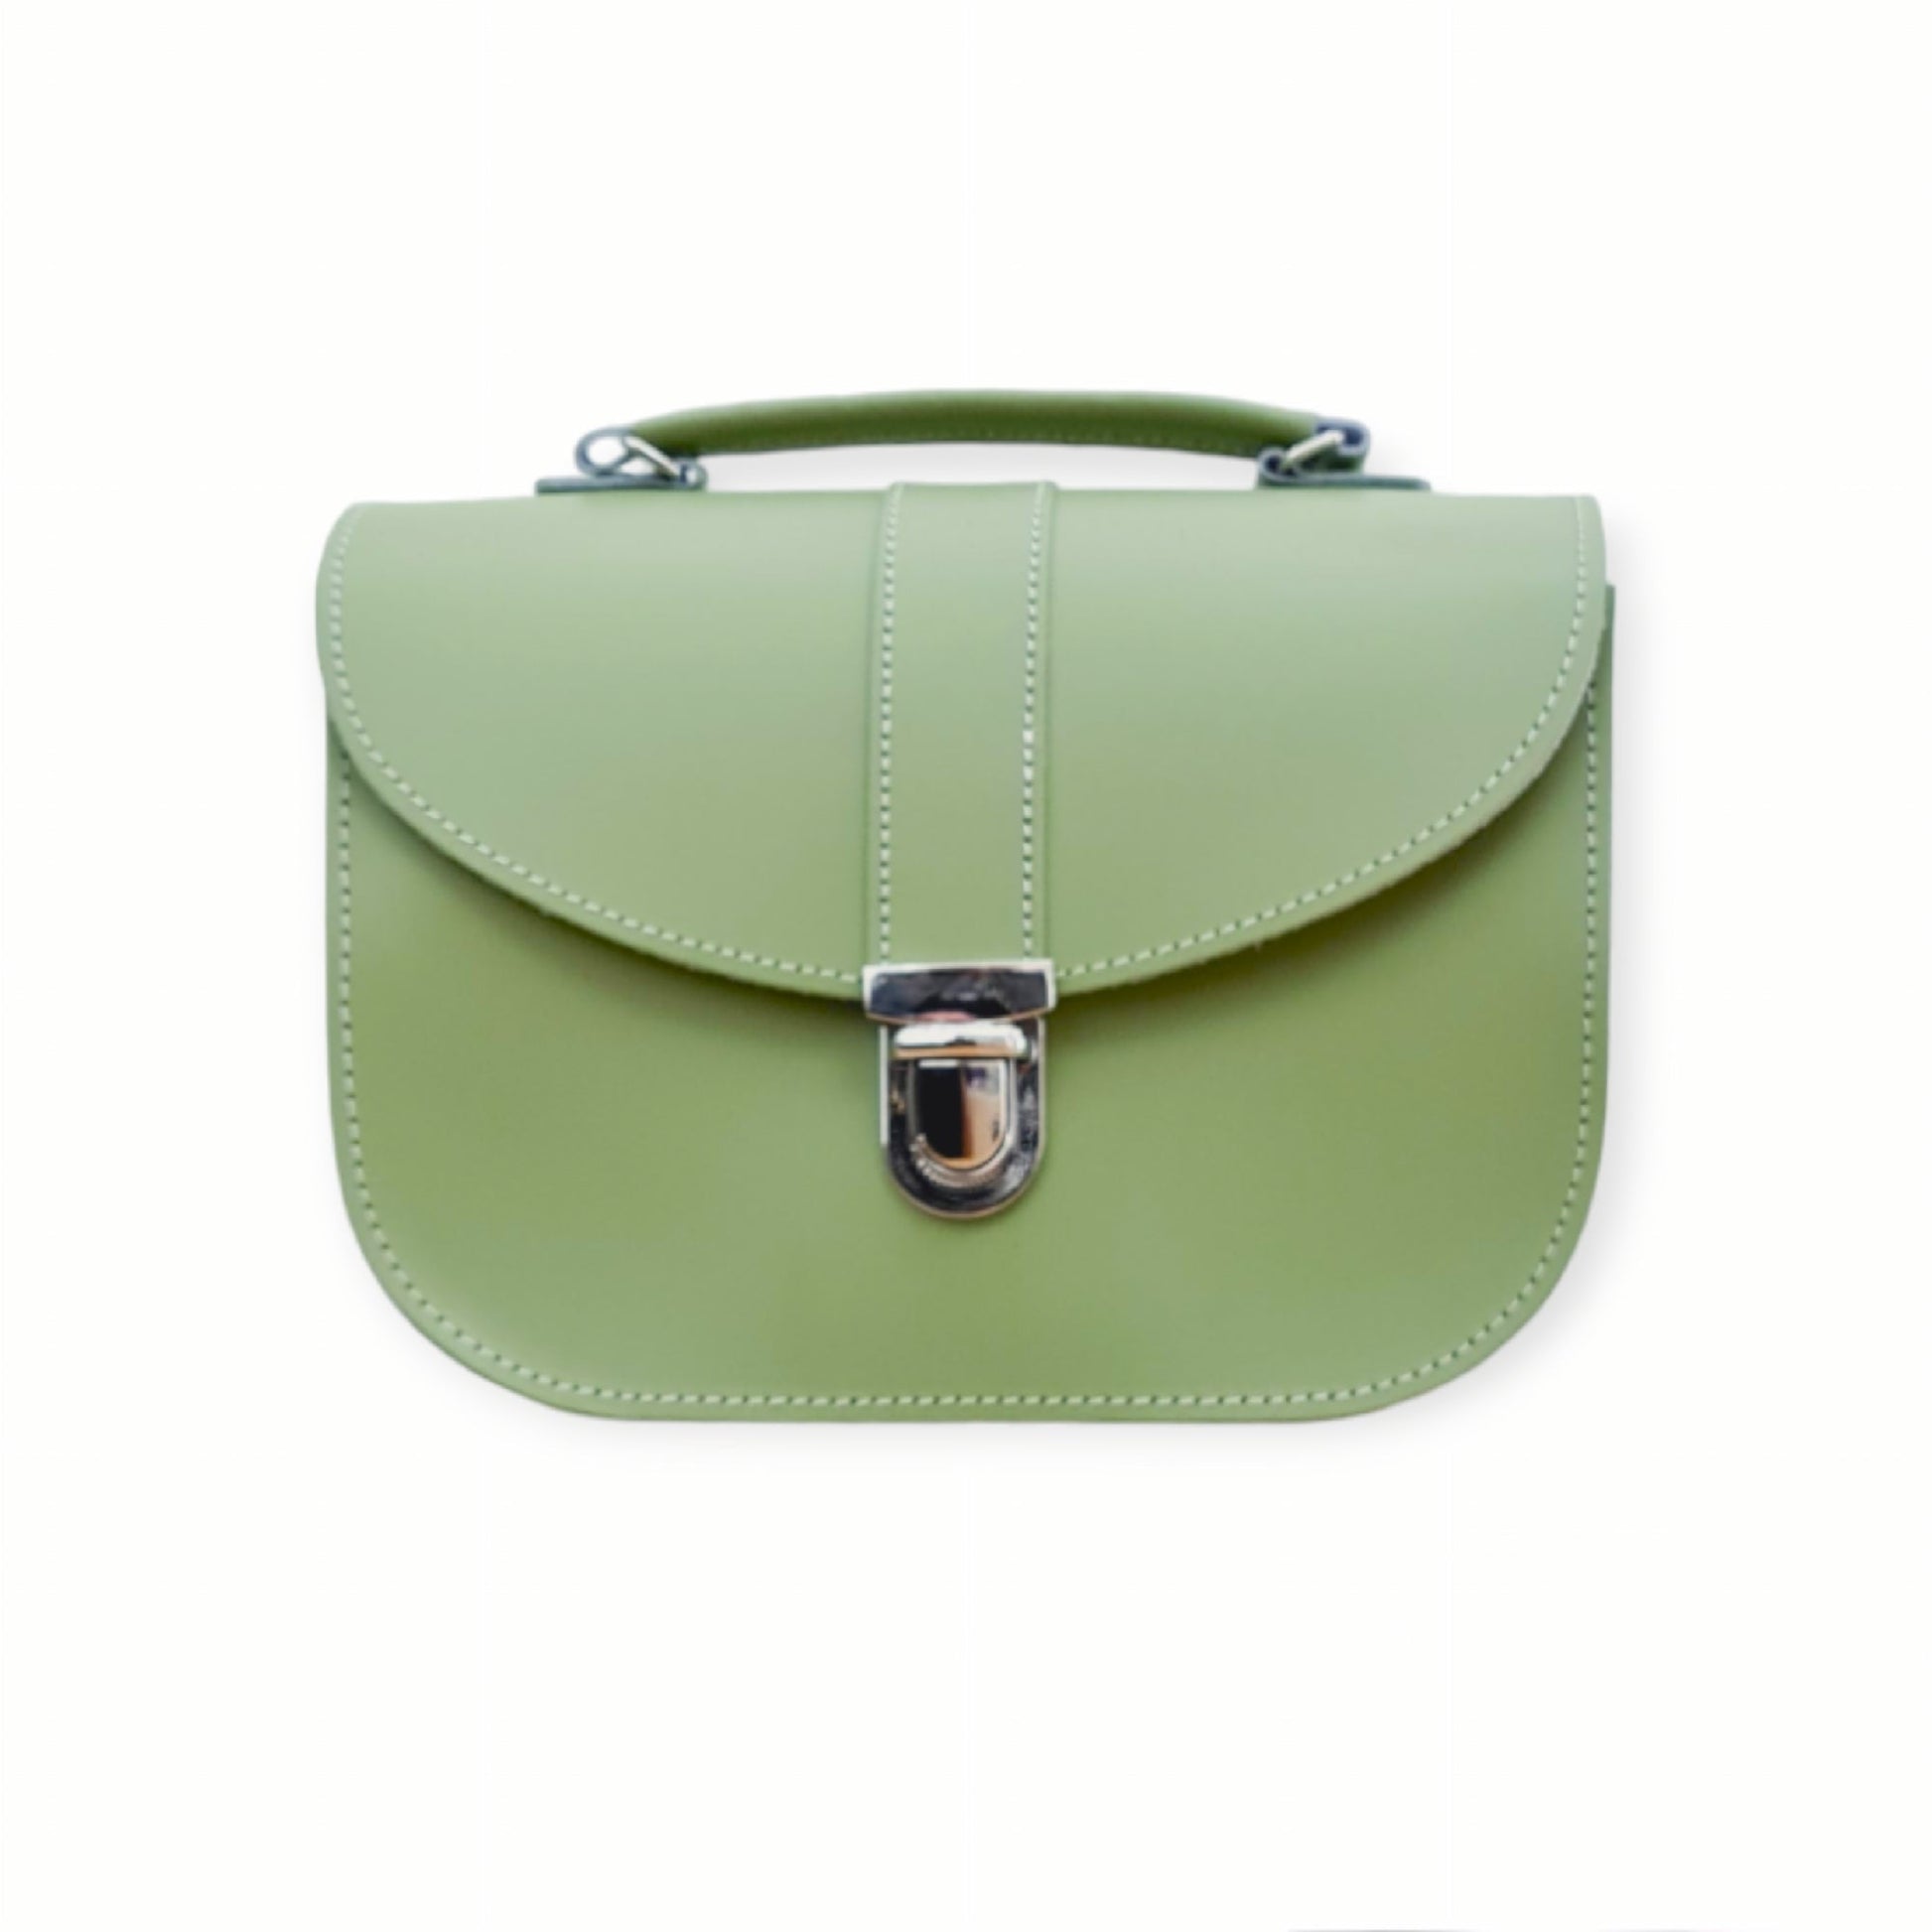 Olympia Handmade Leather Bag - Sage Green-0